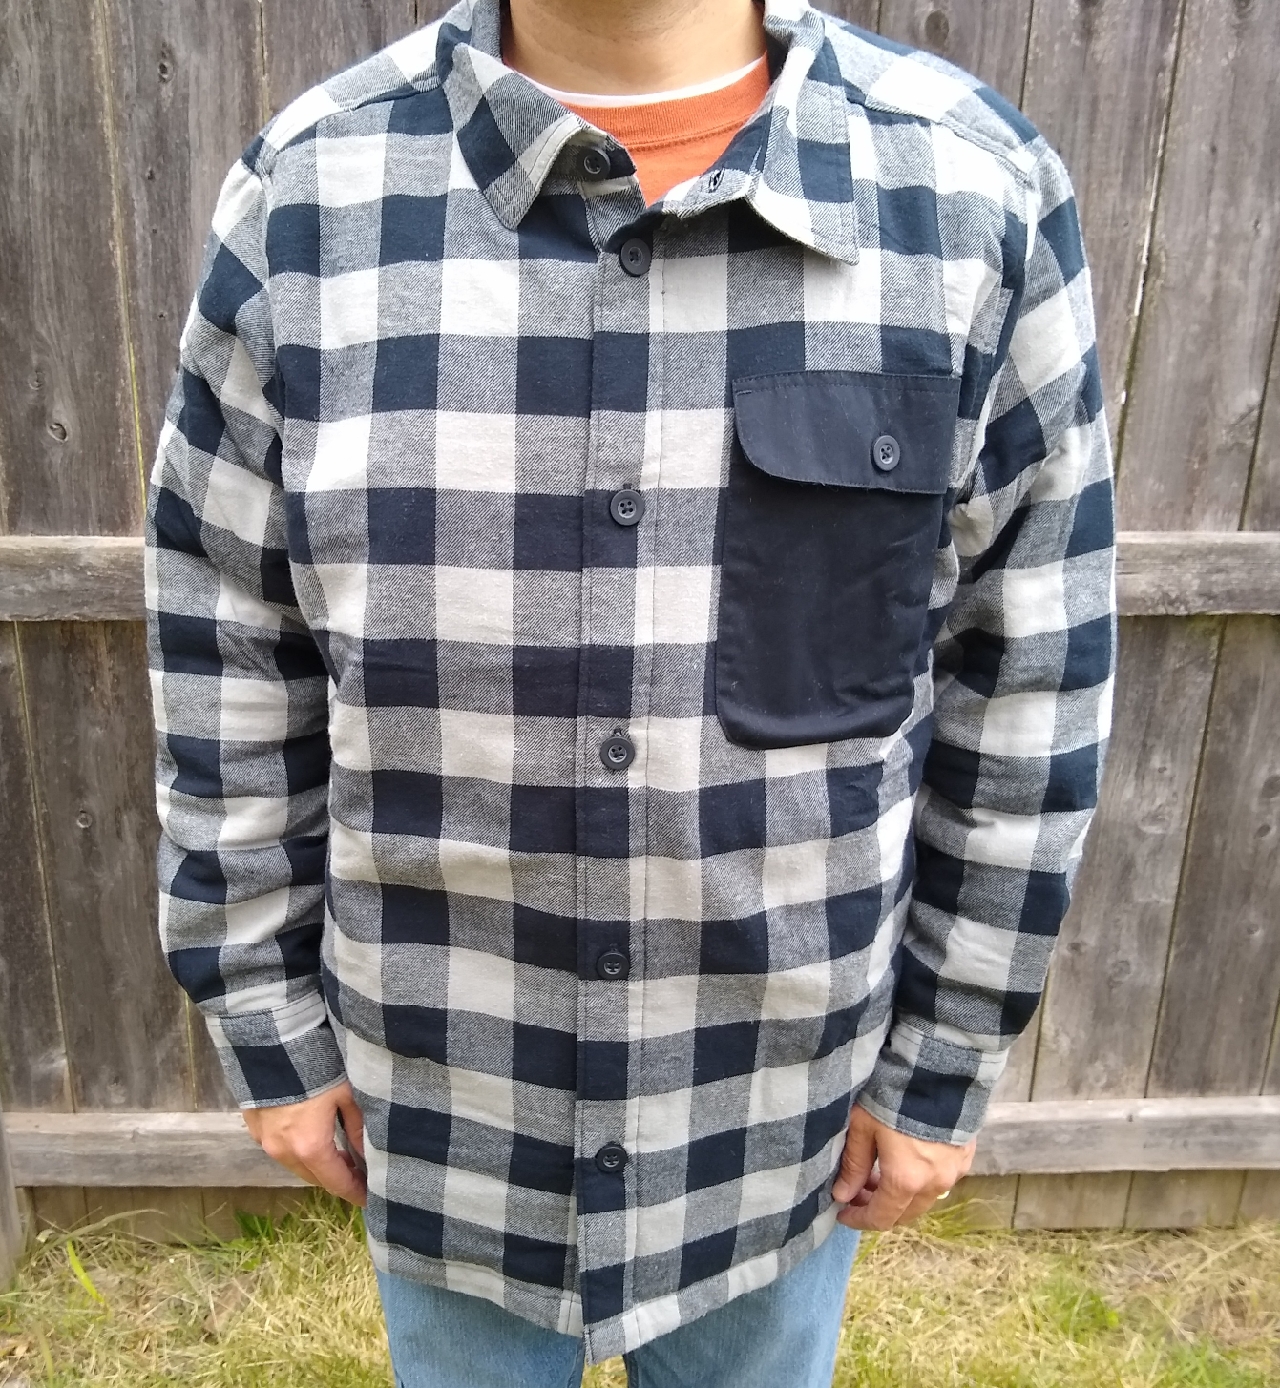 Adventuridge Men's Flannel Shirt Jacket